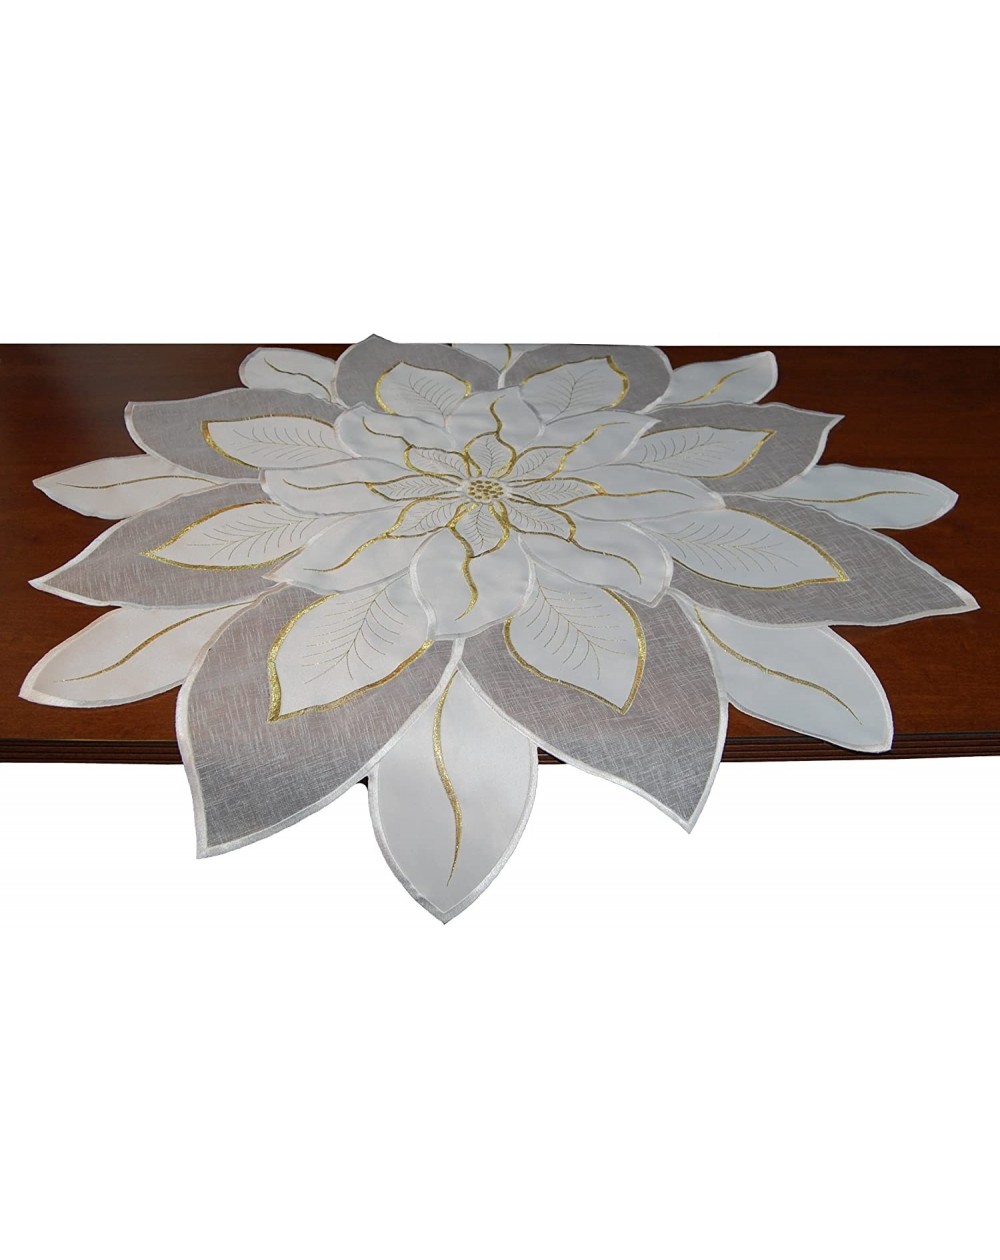 Centerpieces Embroidered Holiday Table Topper (33.5" x 33.5"- White) Poinsettia - White Poinsettia - C6182OEZN5T $31.11